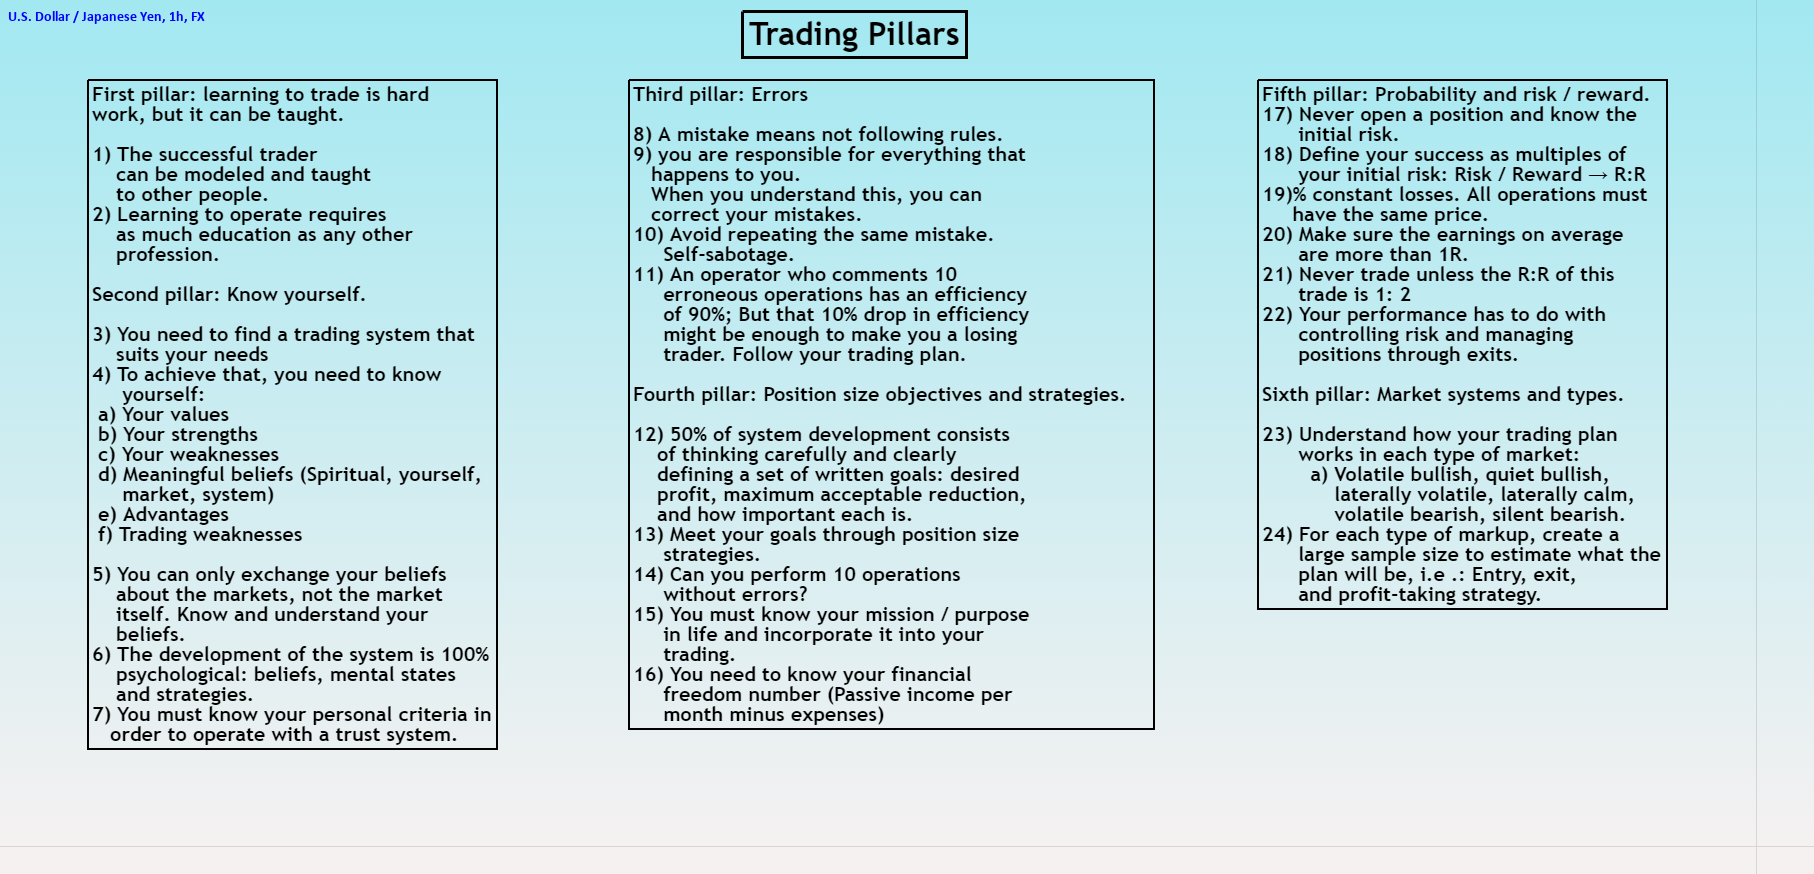 Trading Pillars For FX:USDJPY By Ed_Ale